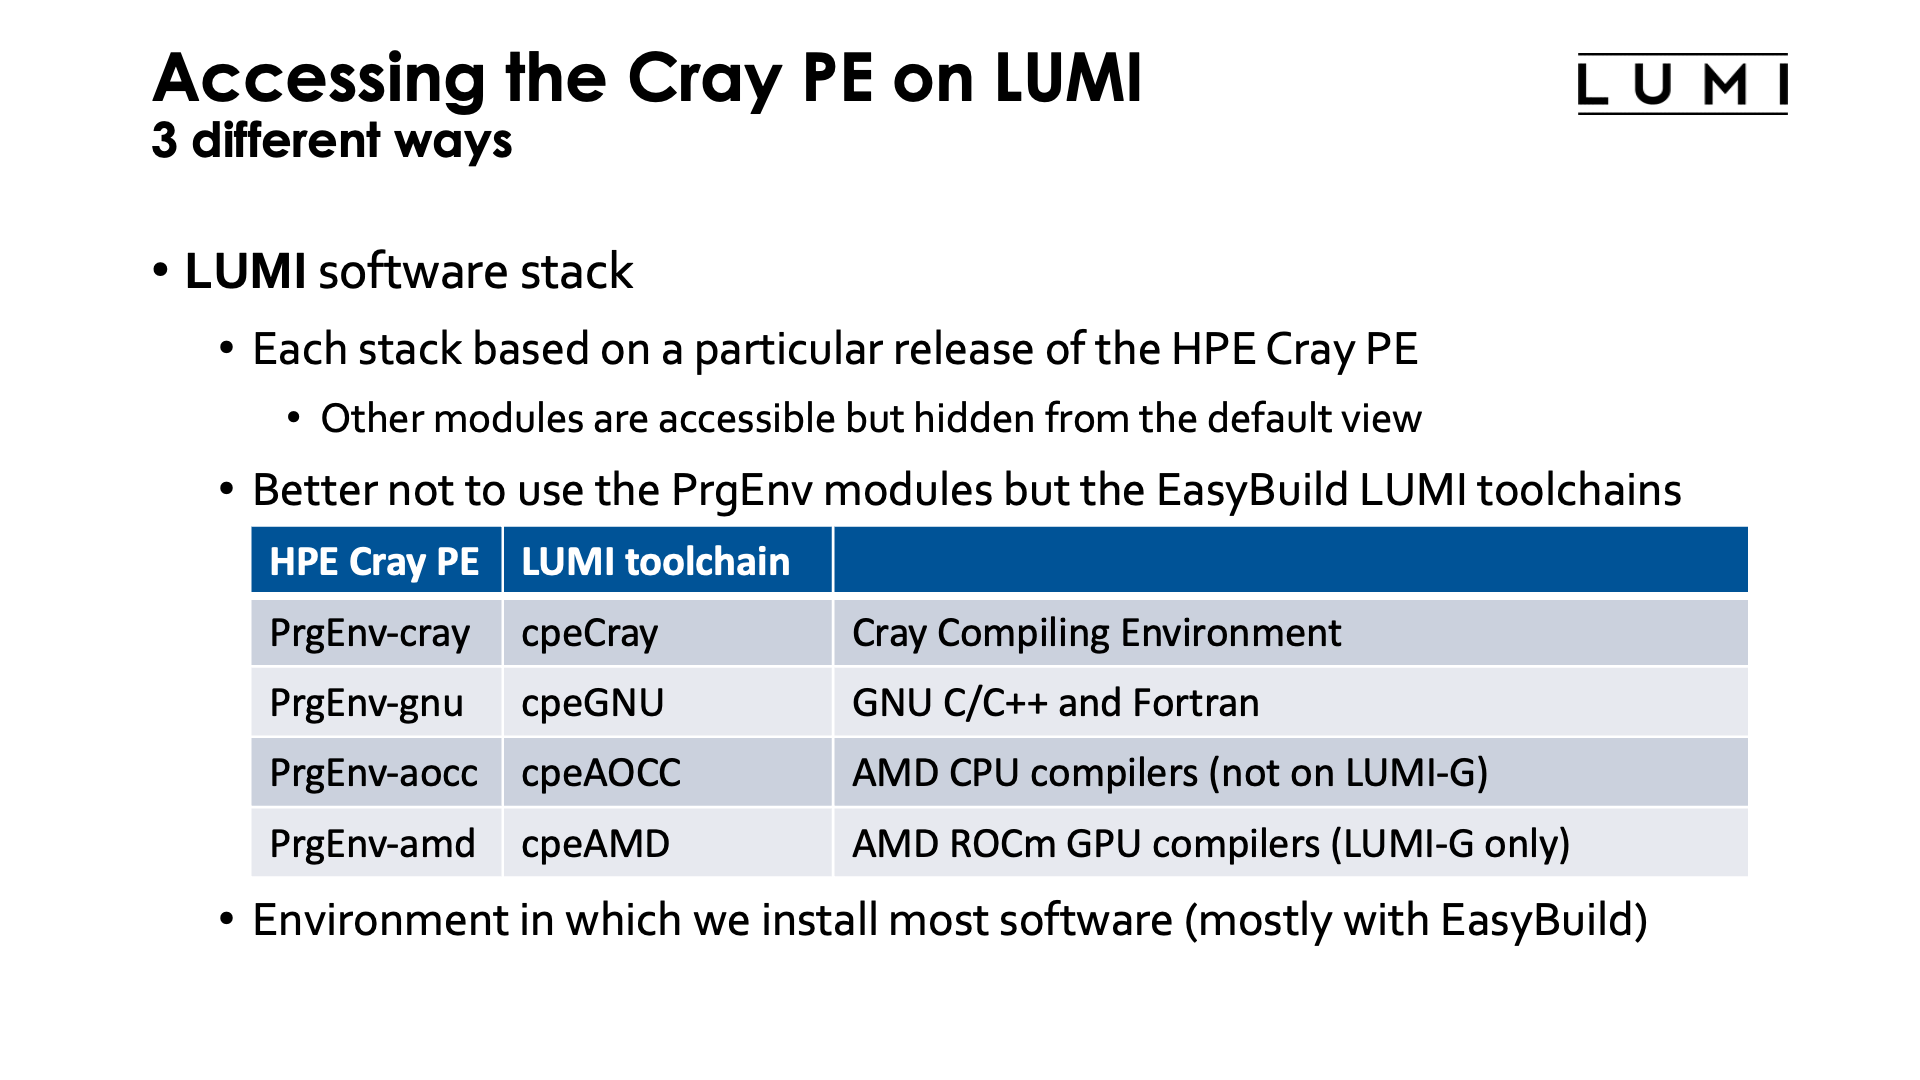 Accessing the Cray PE: LUMI stack